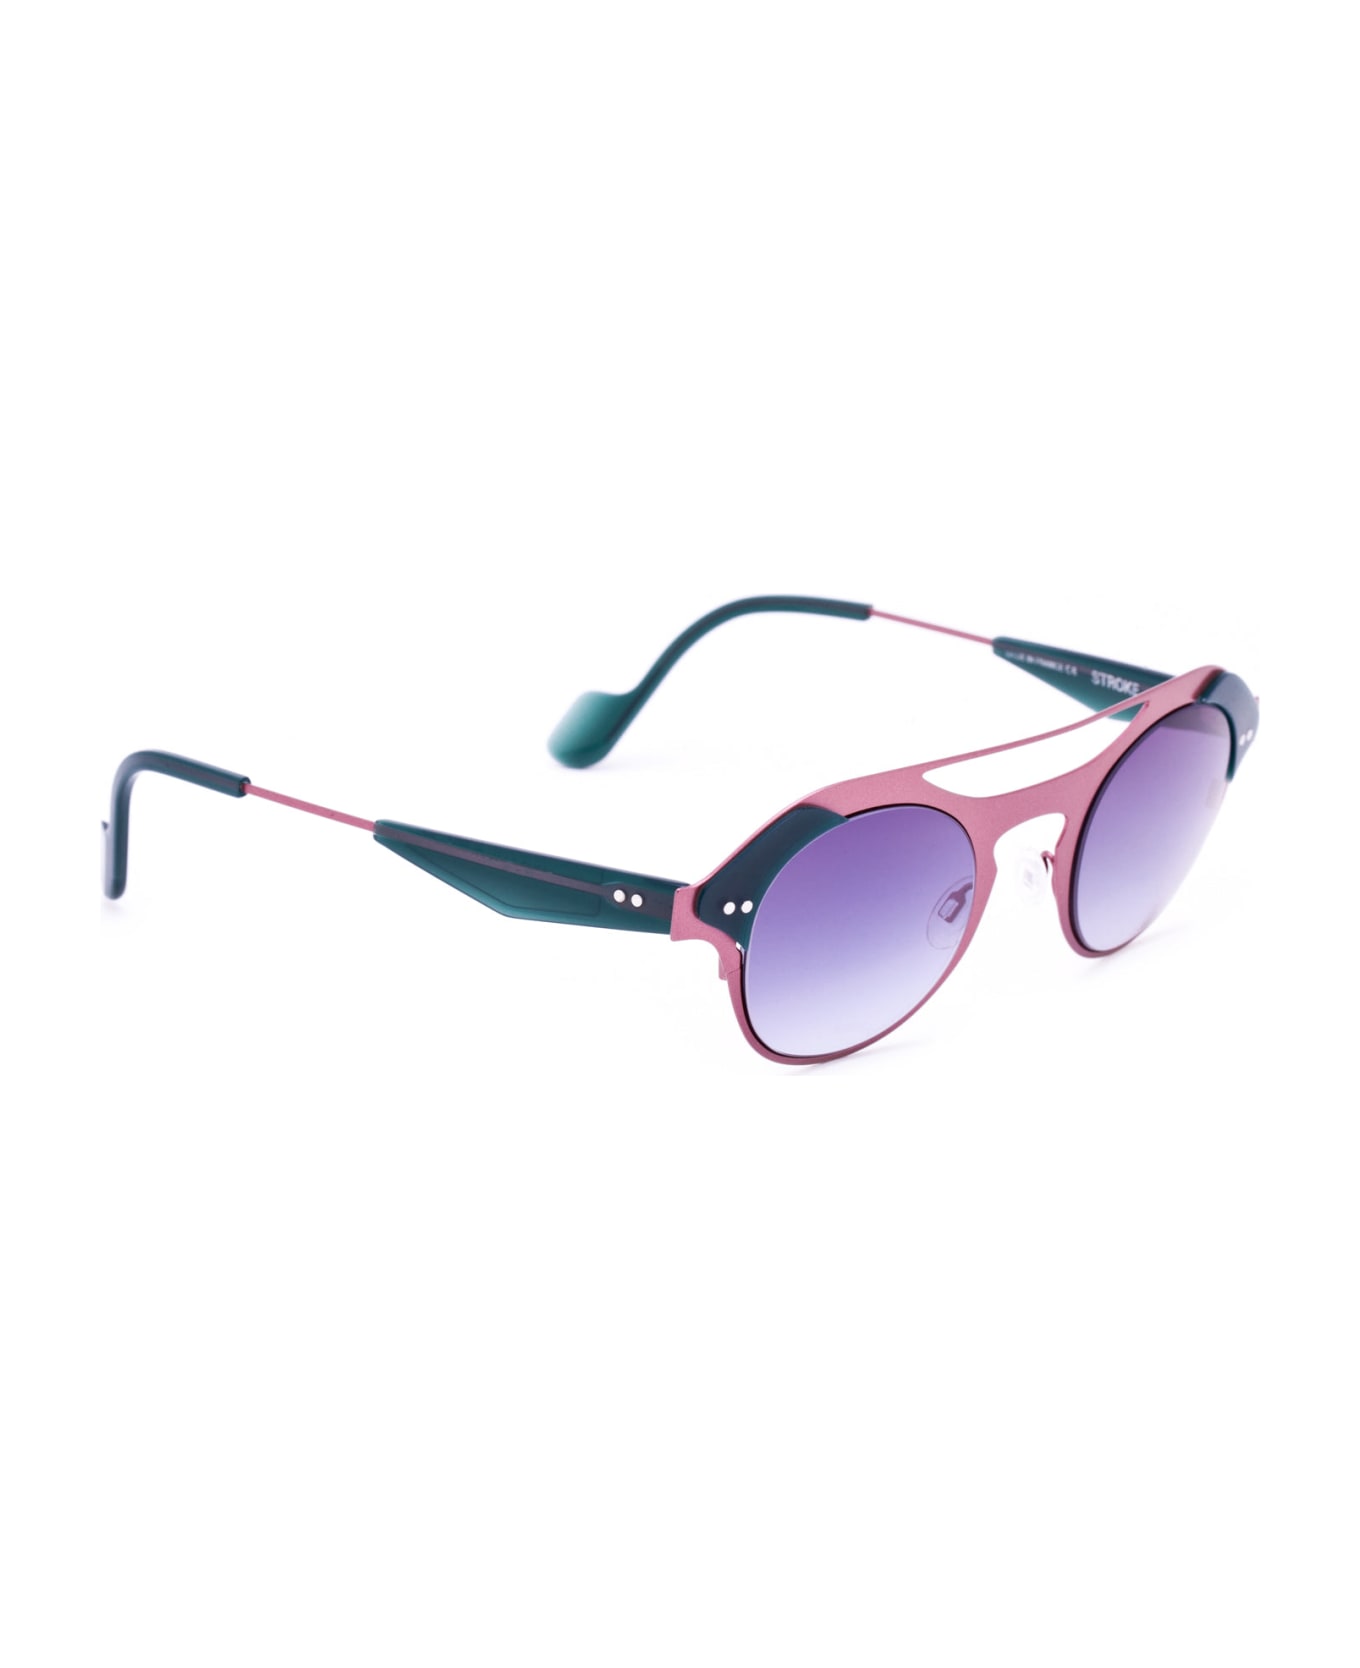 Anne & Valentin Stroke-u233 Sunglasses - pink サングラス